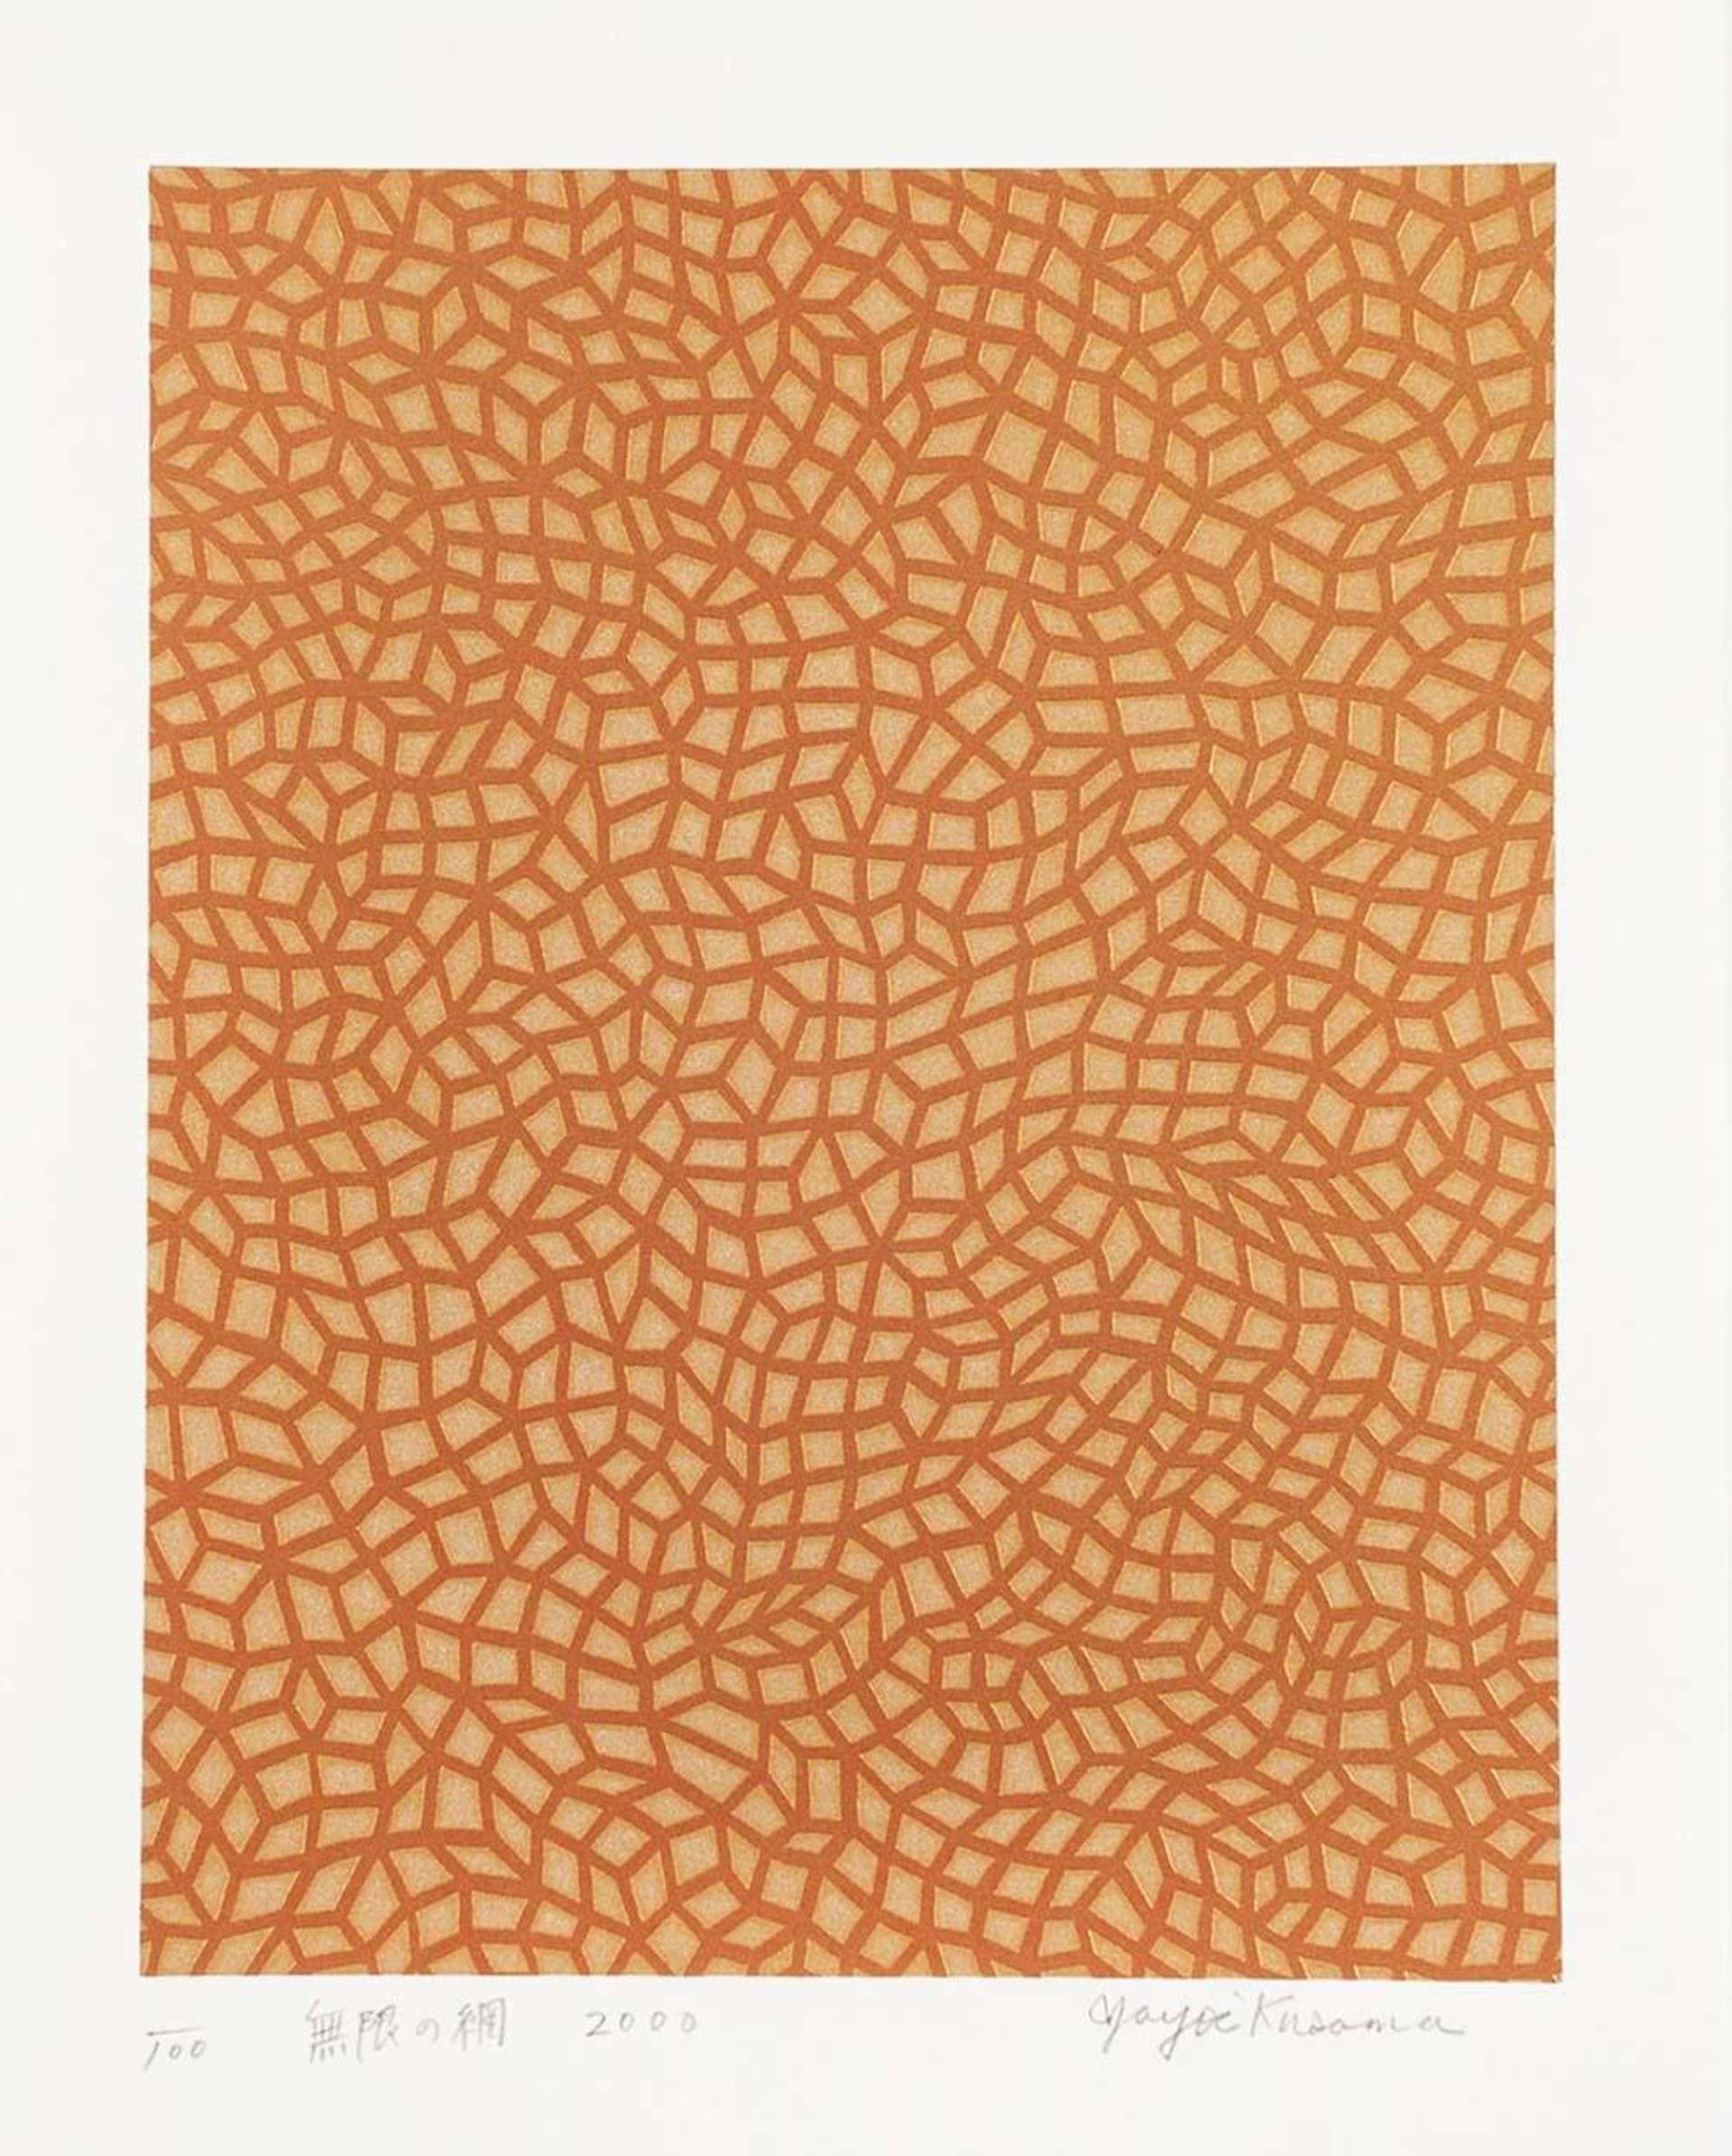 Yayomi Kusama's Infinity Nets (B) , Kusama 296. A screenprint of a dark orange, geometric pattern over a light orange background.